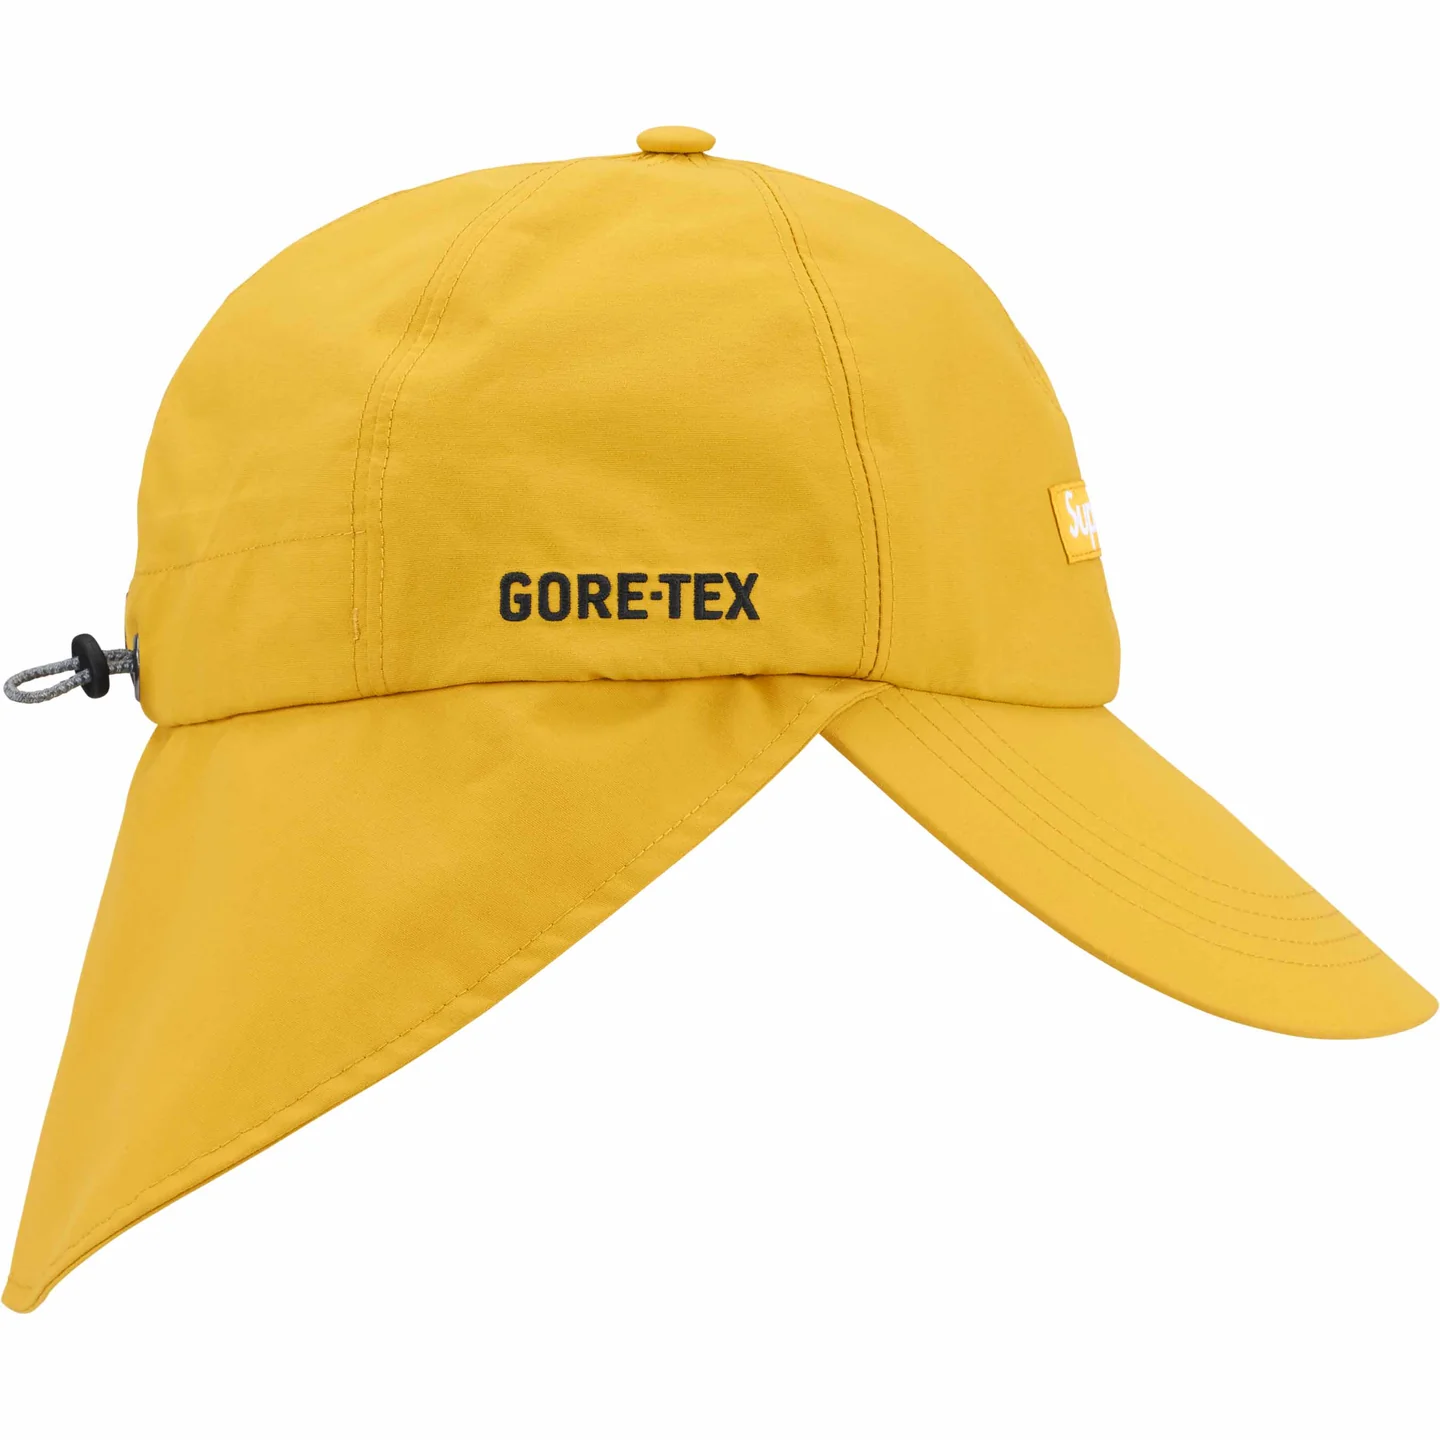 GORE-TEX Sunshield Hat | Supreme 24ss